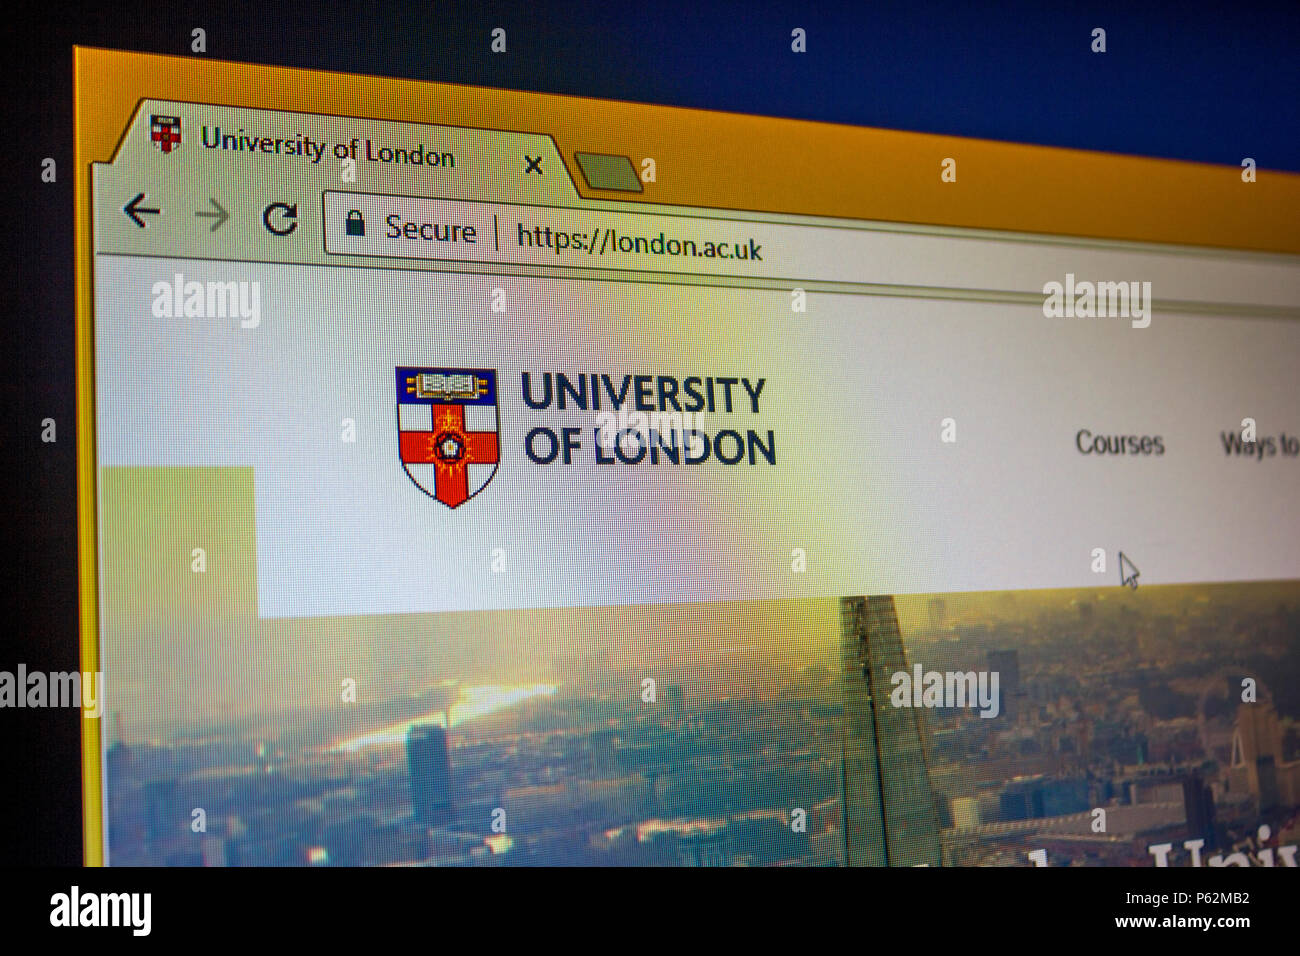 Website - University of London Stock Photo